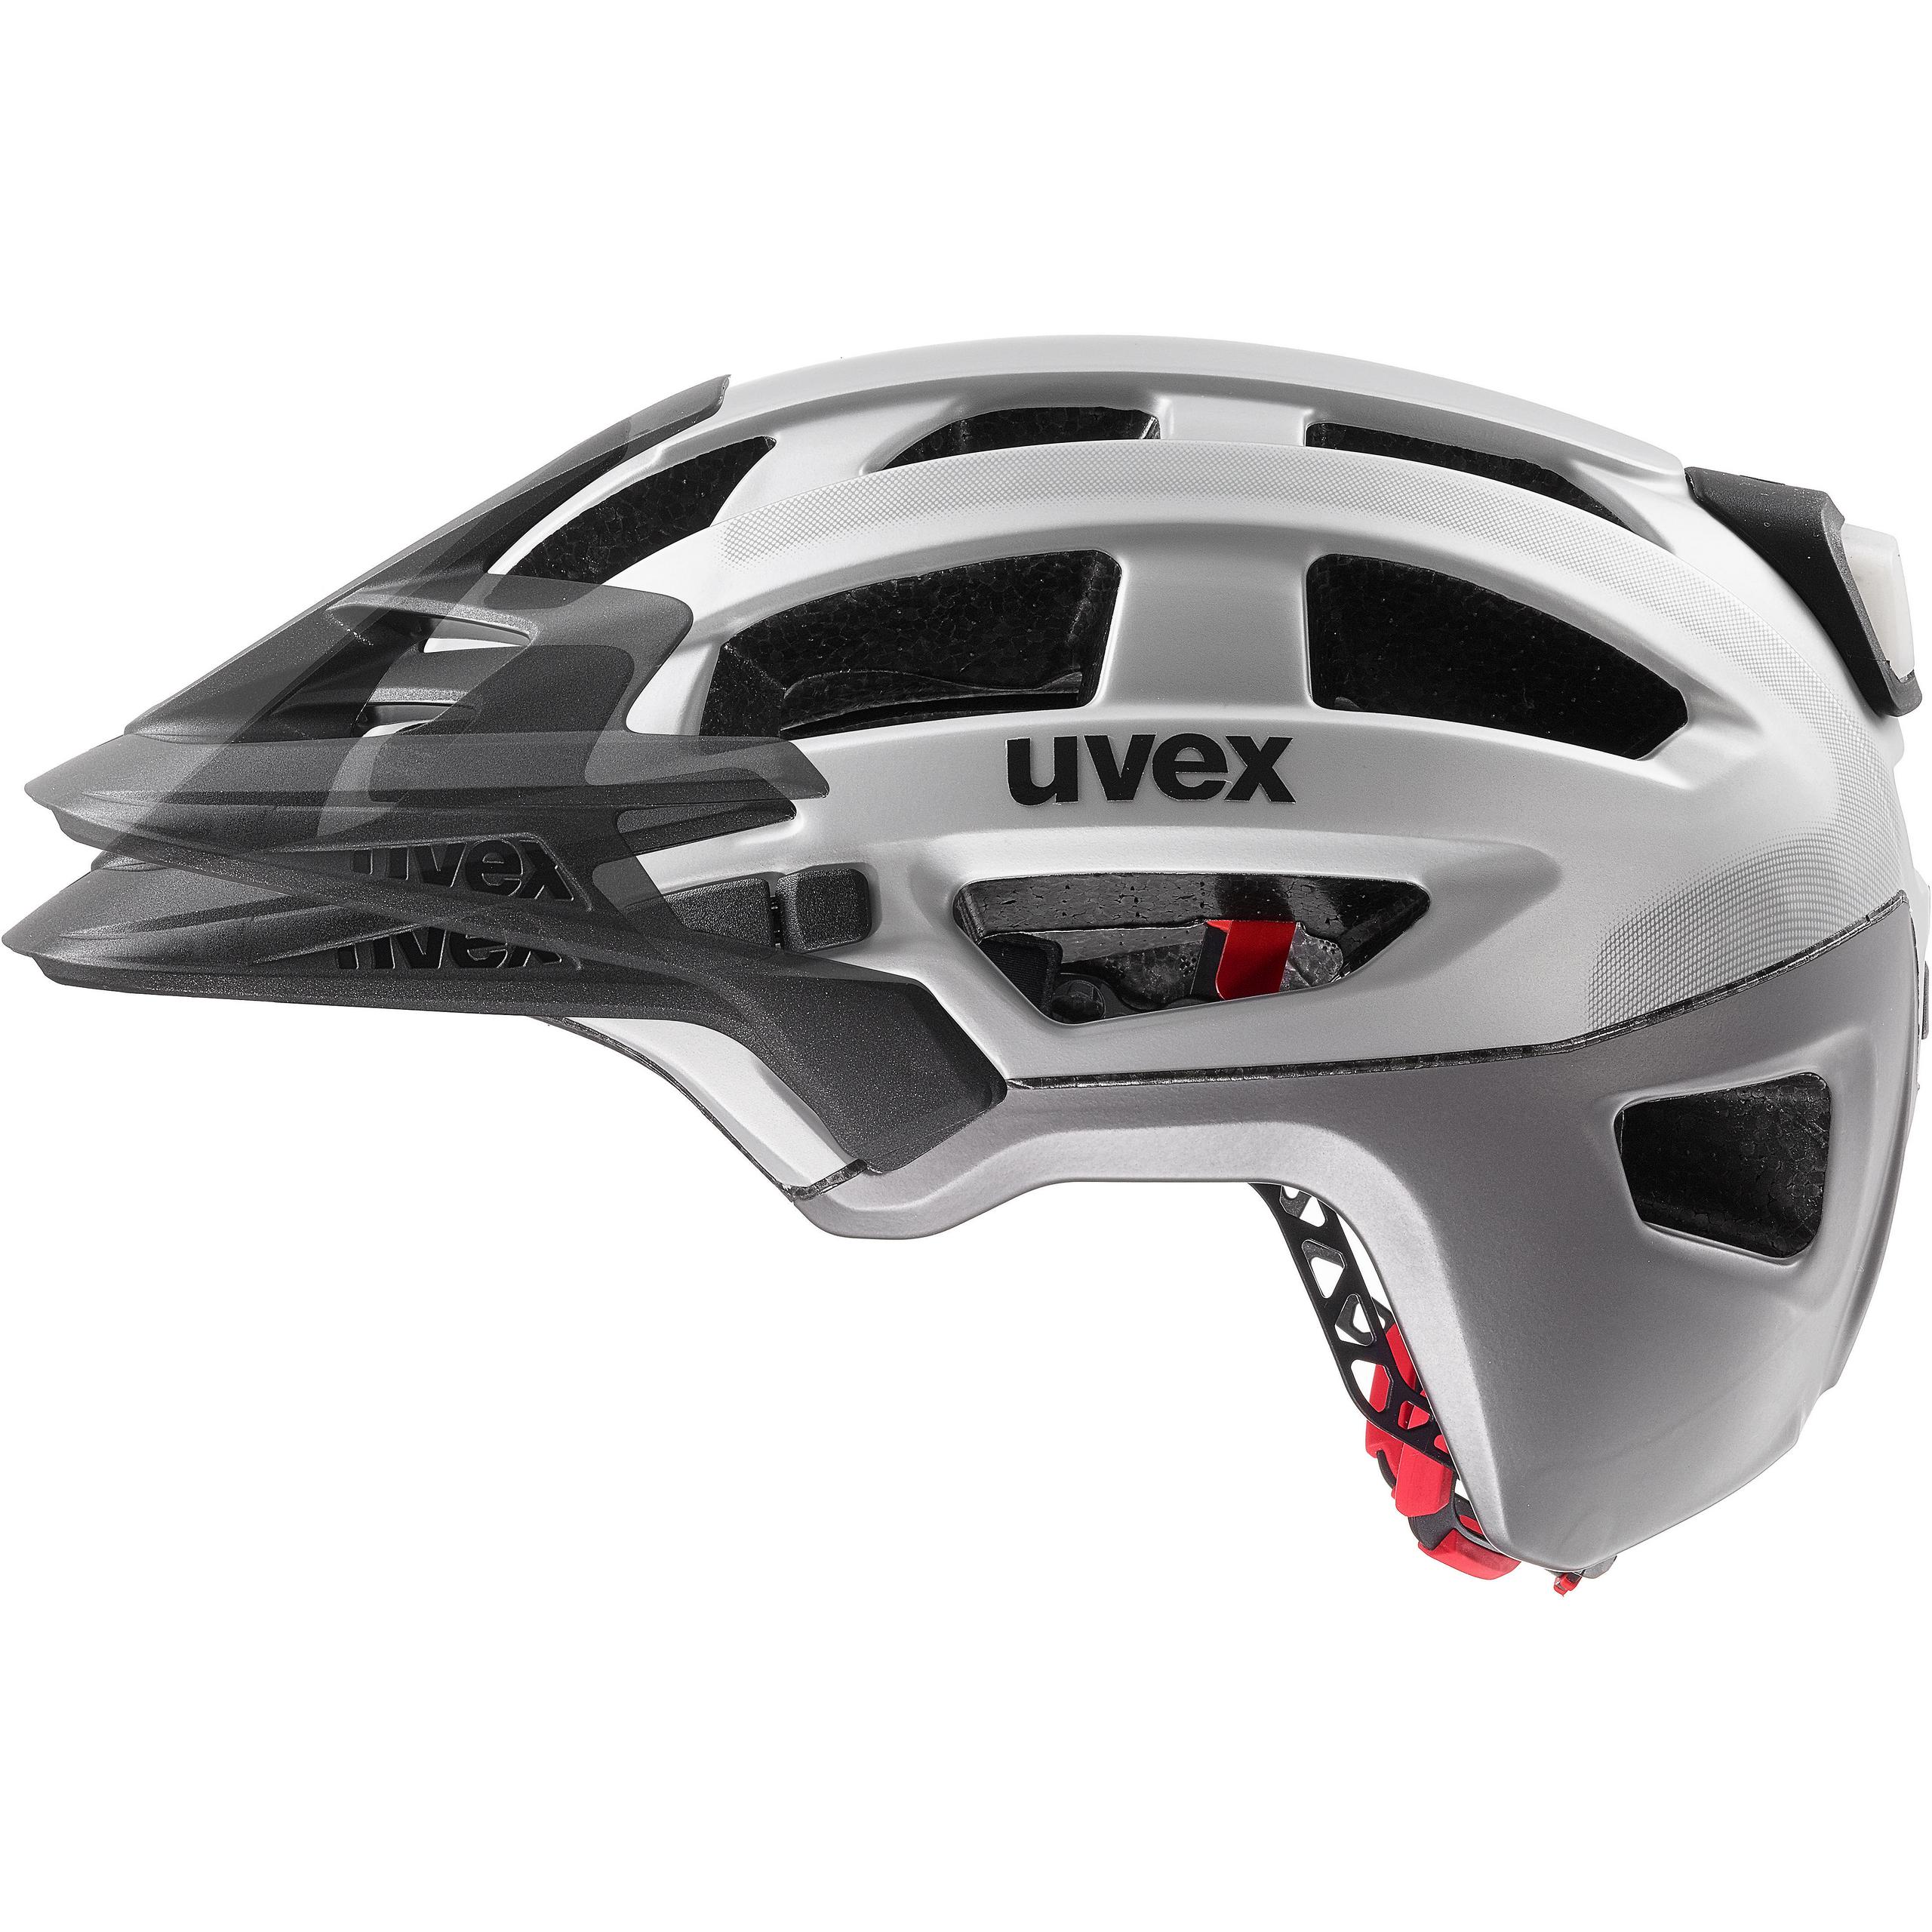 Uvex Finale Light Radhelm Bike Helmet Bike Helmet LED Light Helmet S41097402 